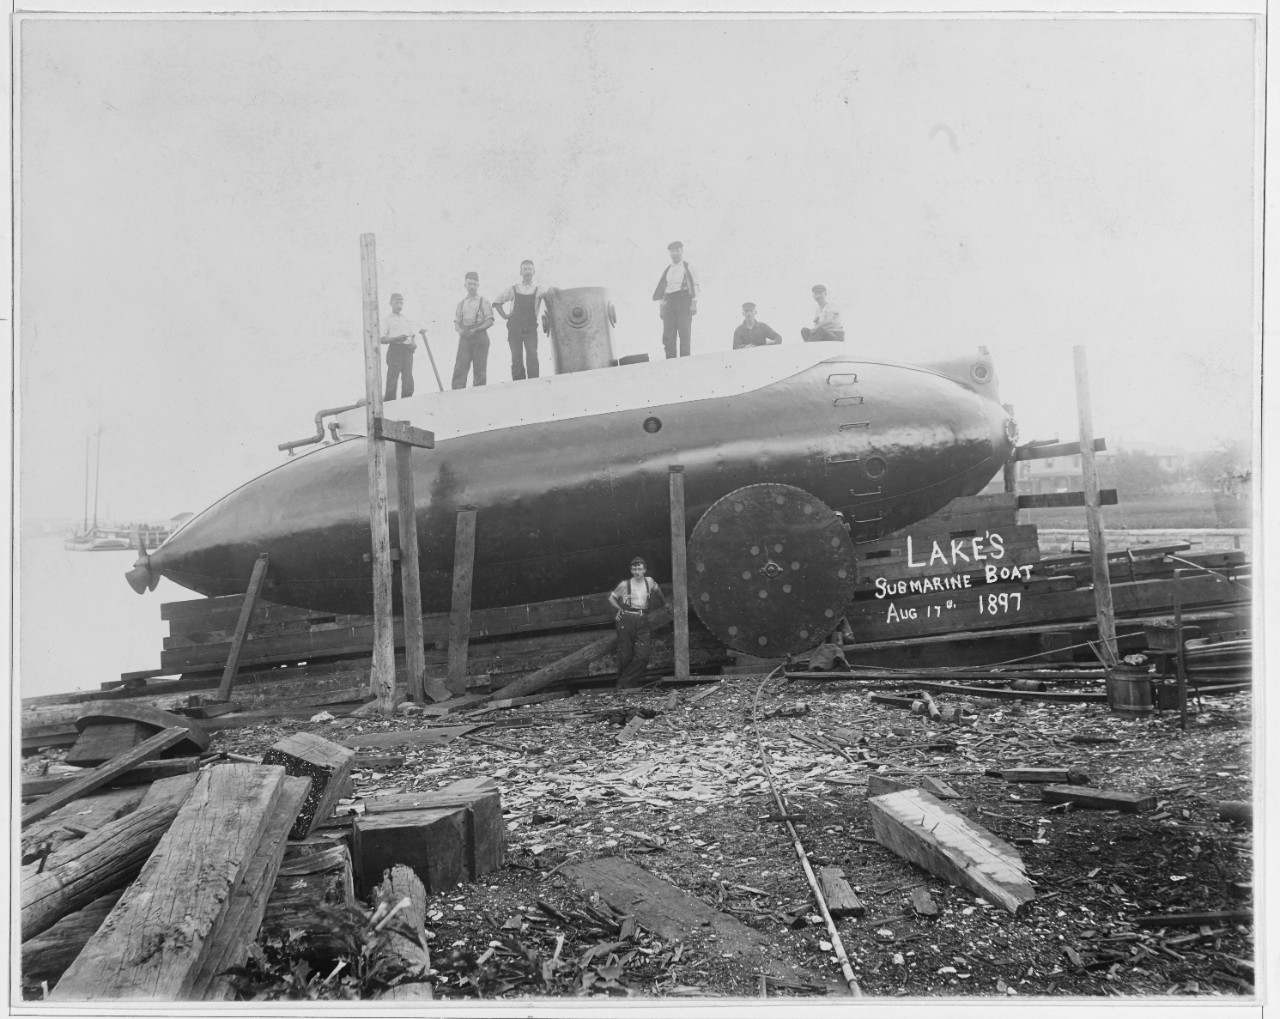 Lake's submarine boat